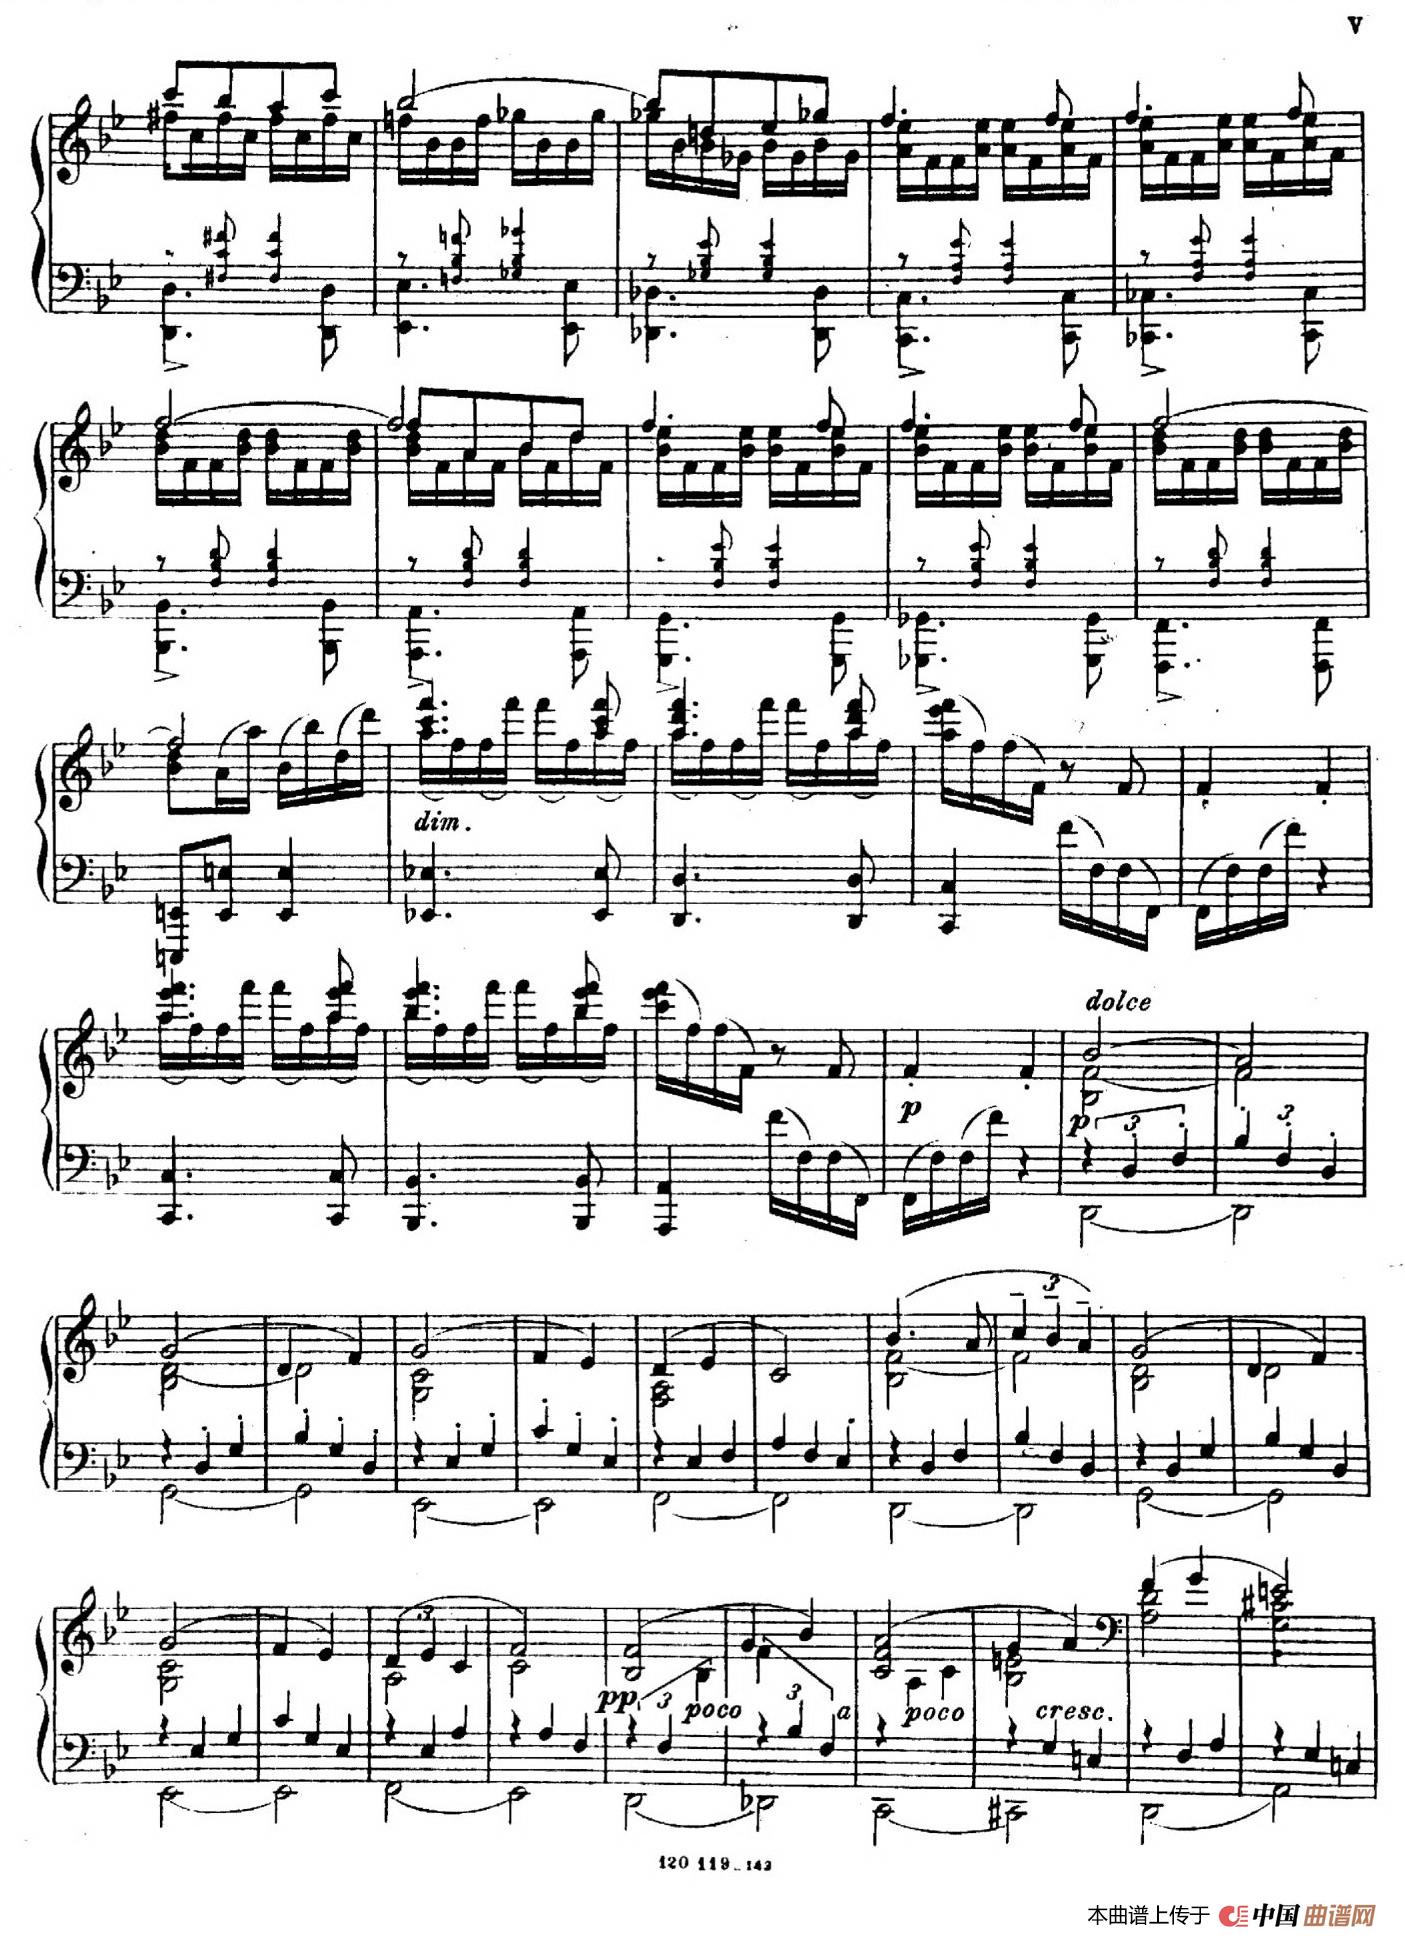 《Overture from Prince Igor》钢琴曲谱图分享